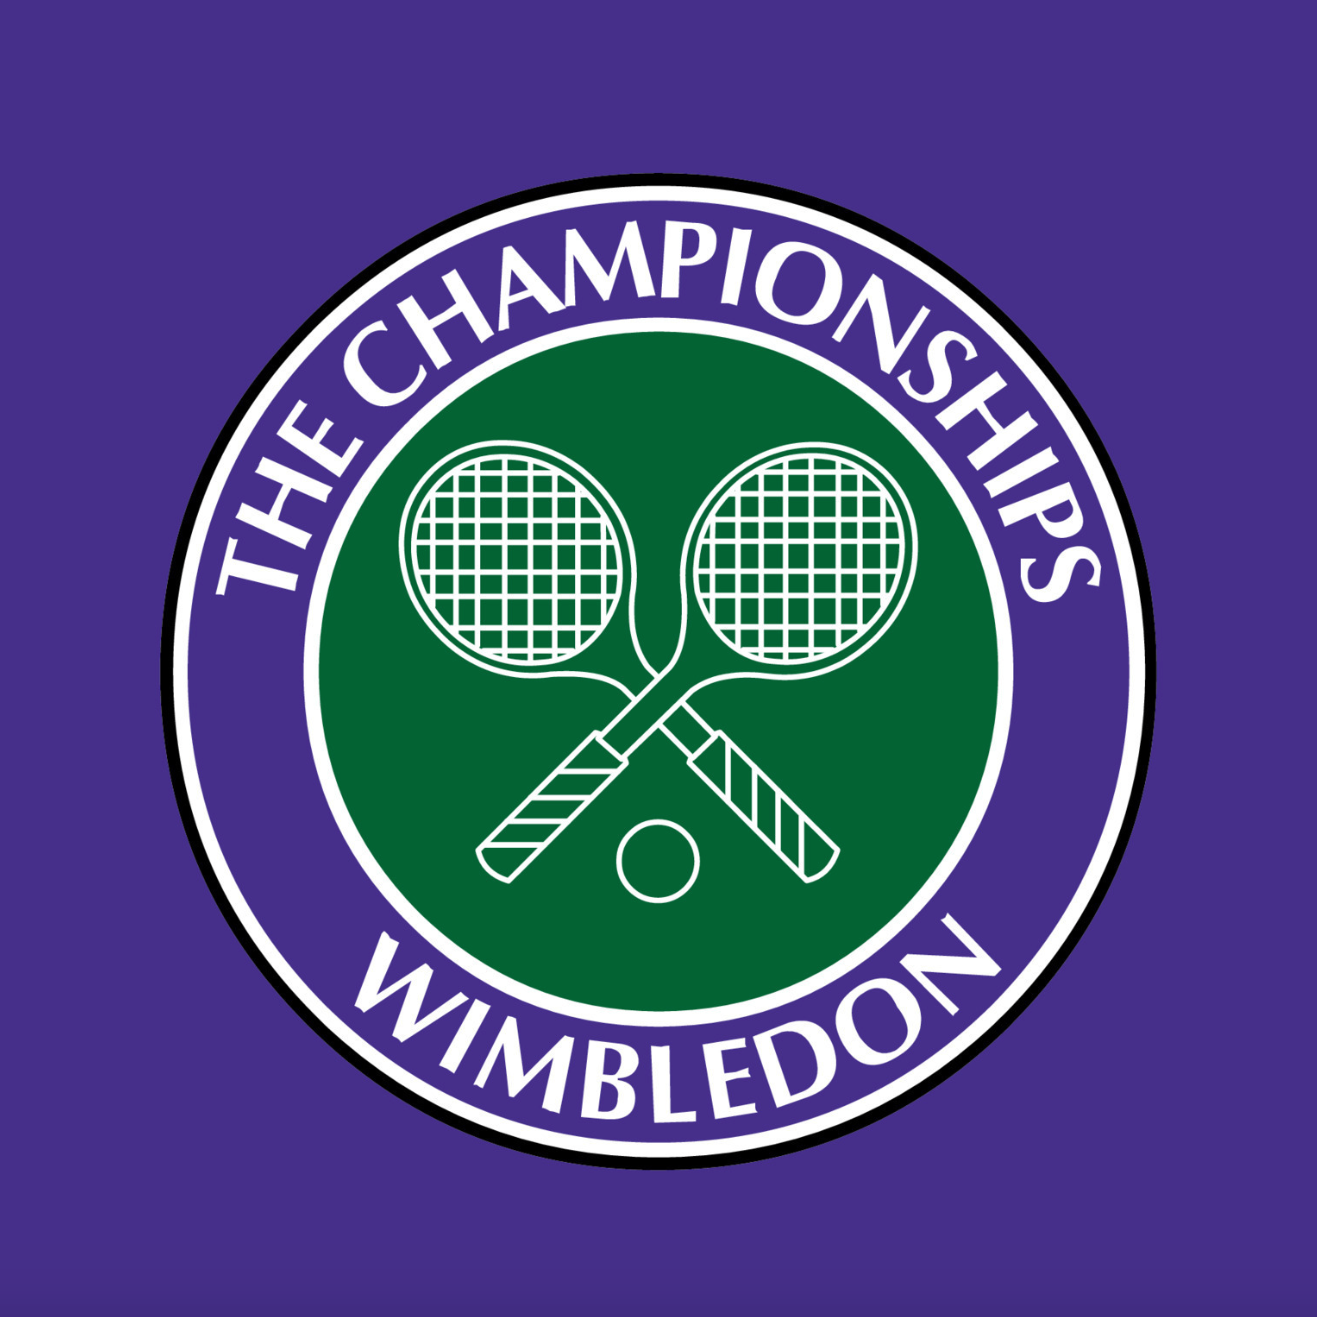 How to Watch Wimbledon Mens Final Online Djokovic vs